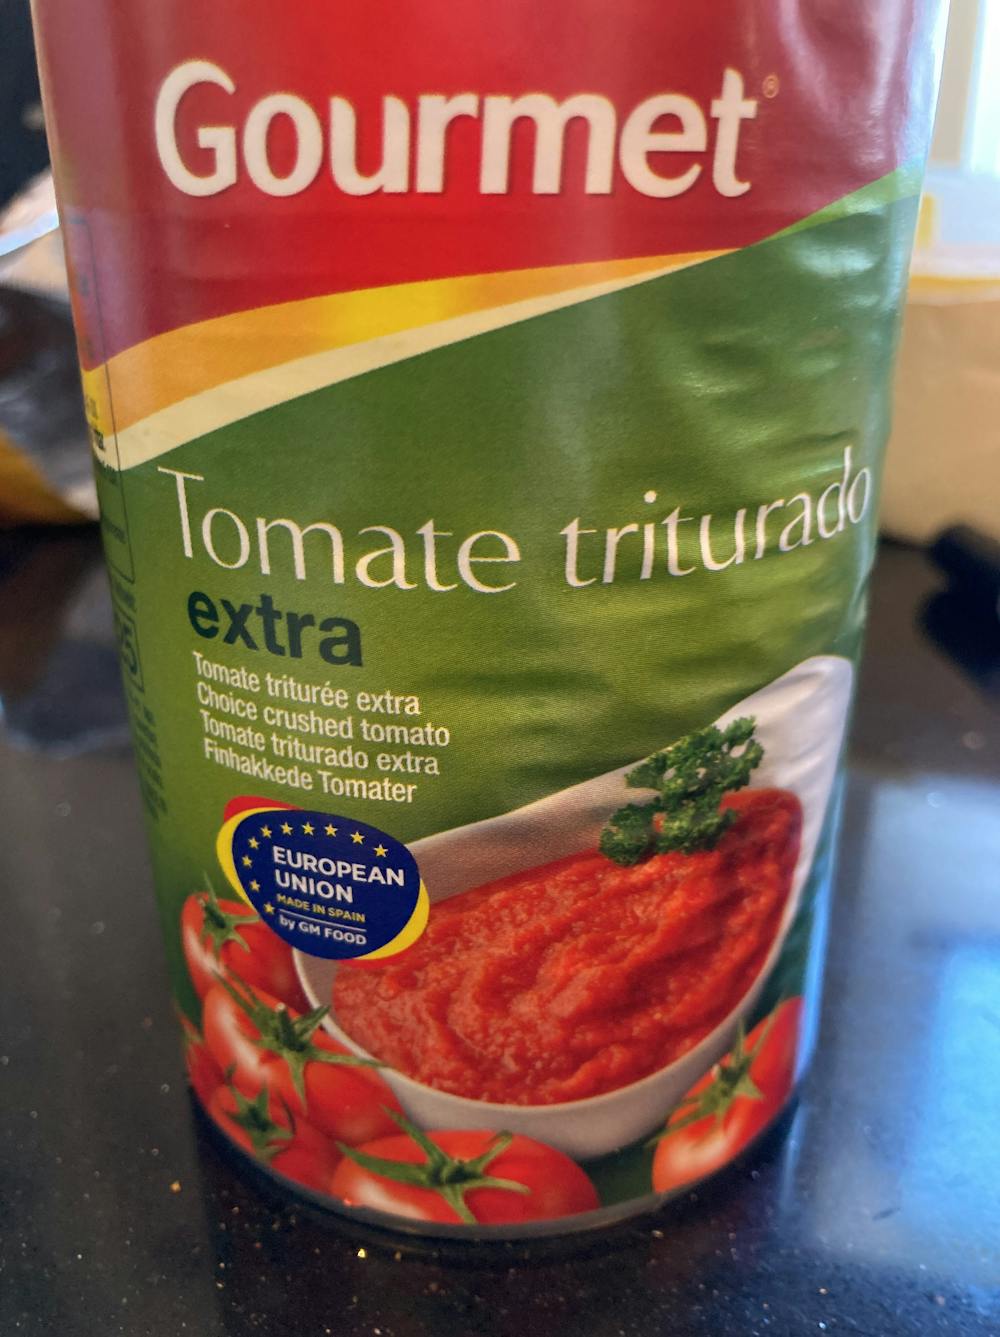 Most tomat, Gourmet